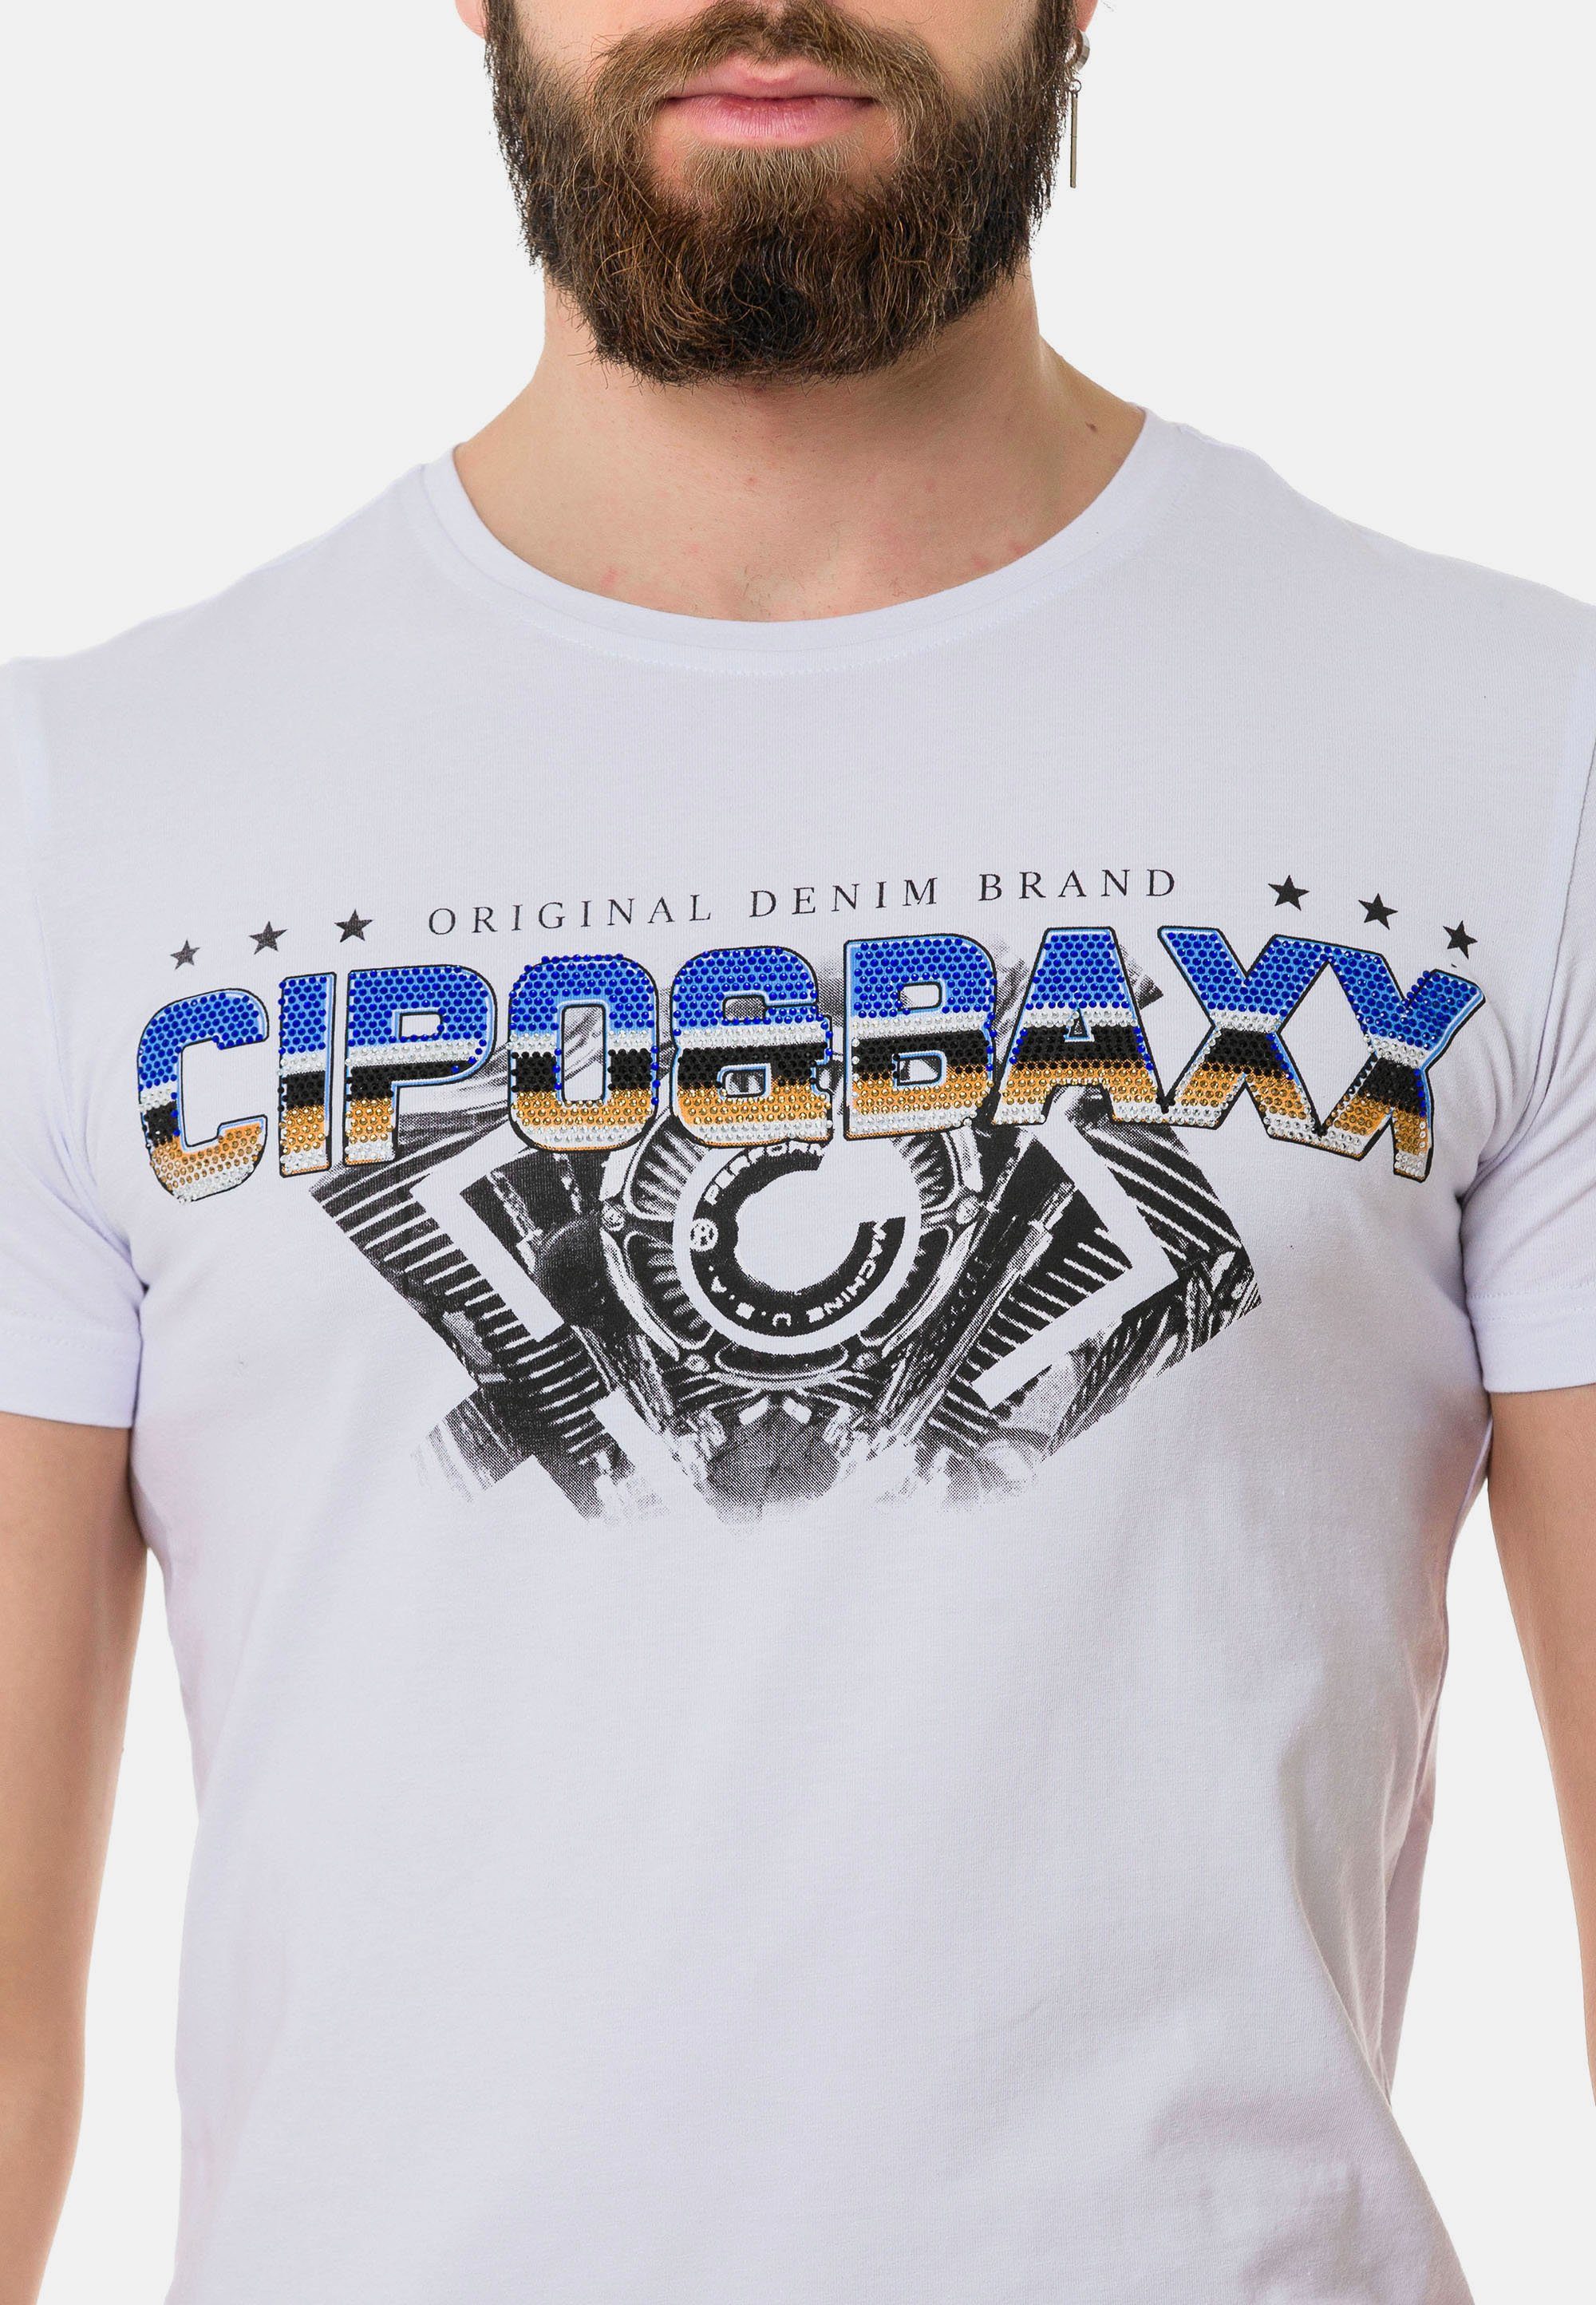 Cipo & Baxx T-Shirt mit weiß trendigem Marken-Schriftzug